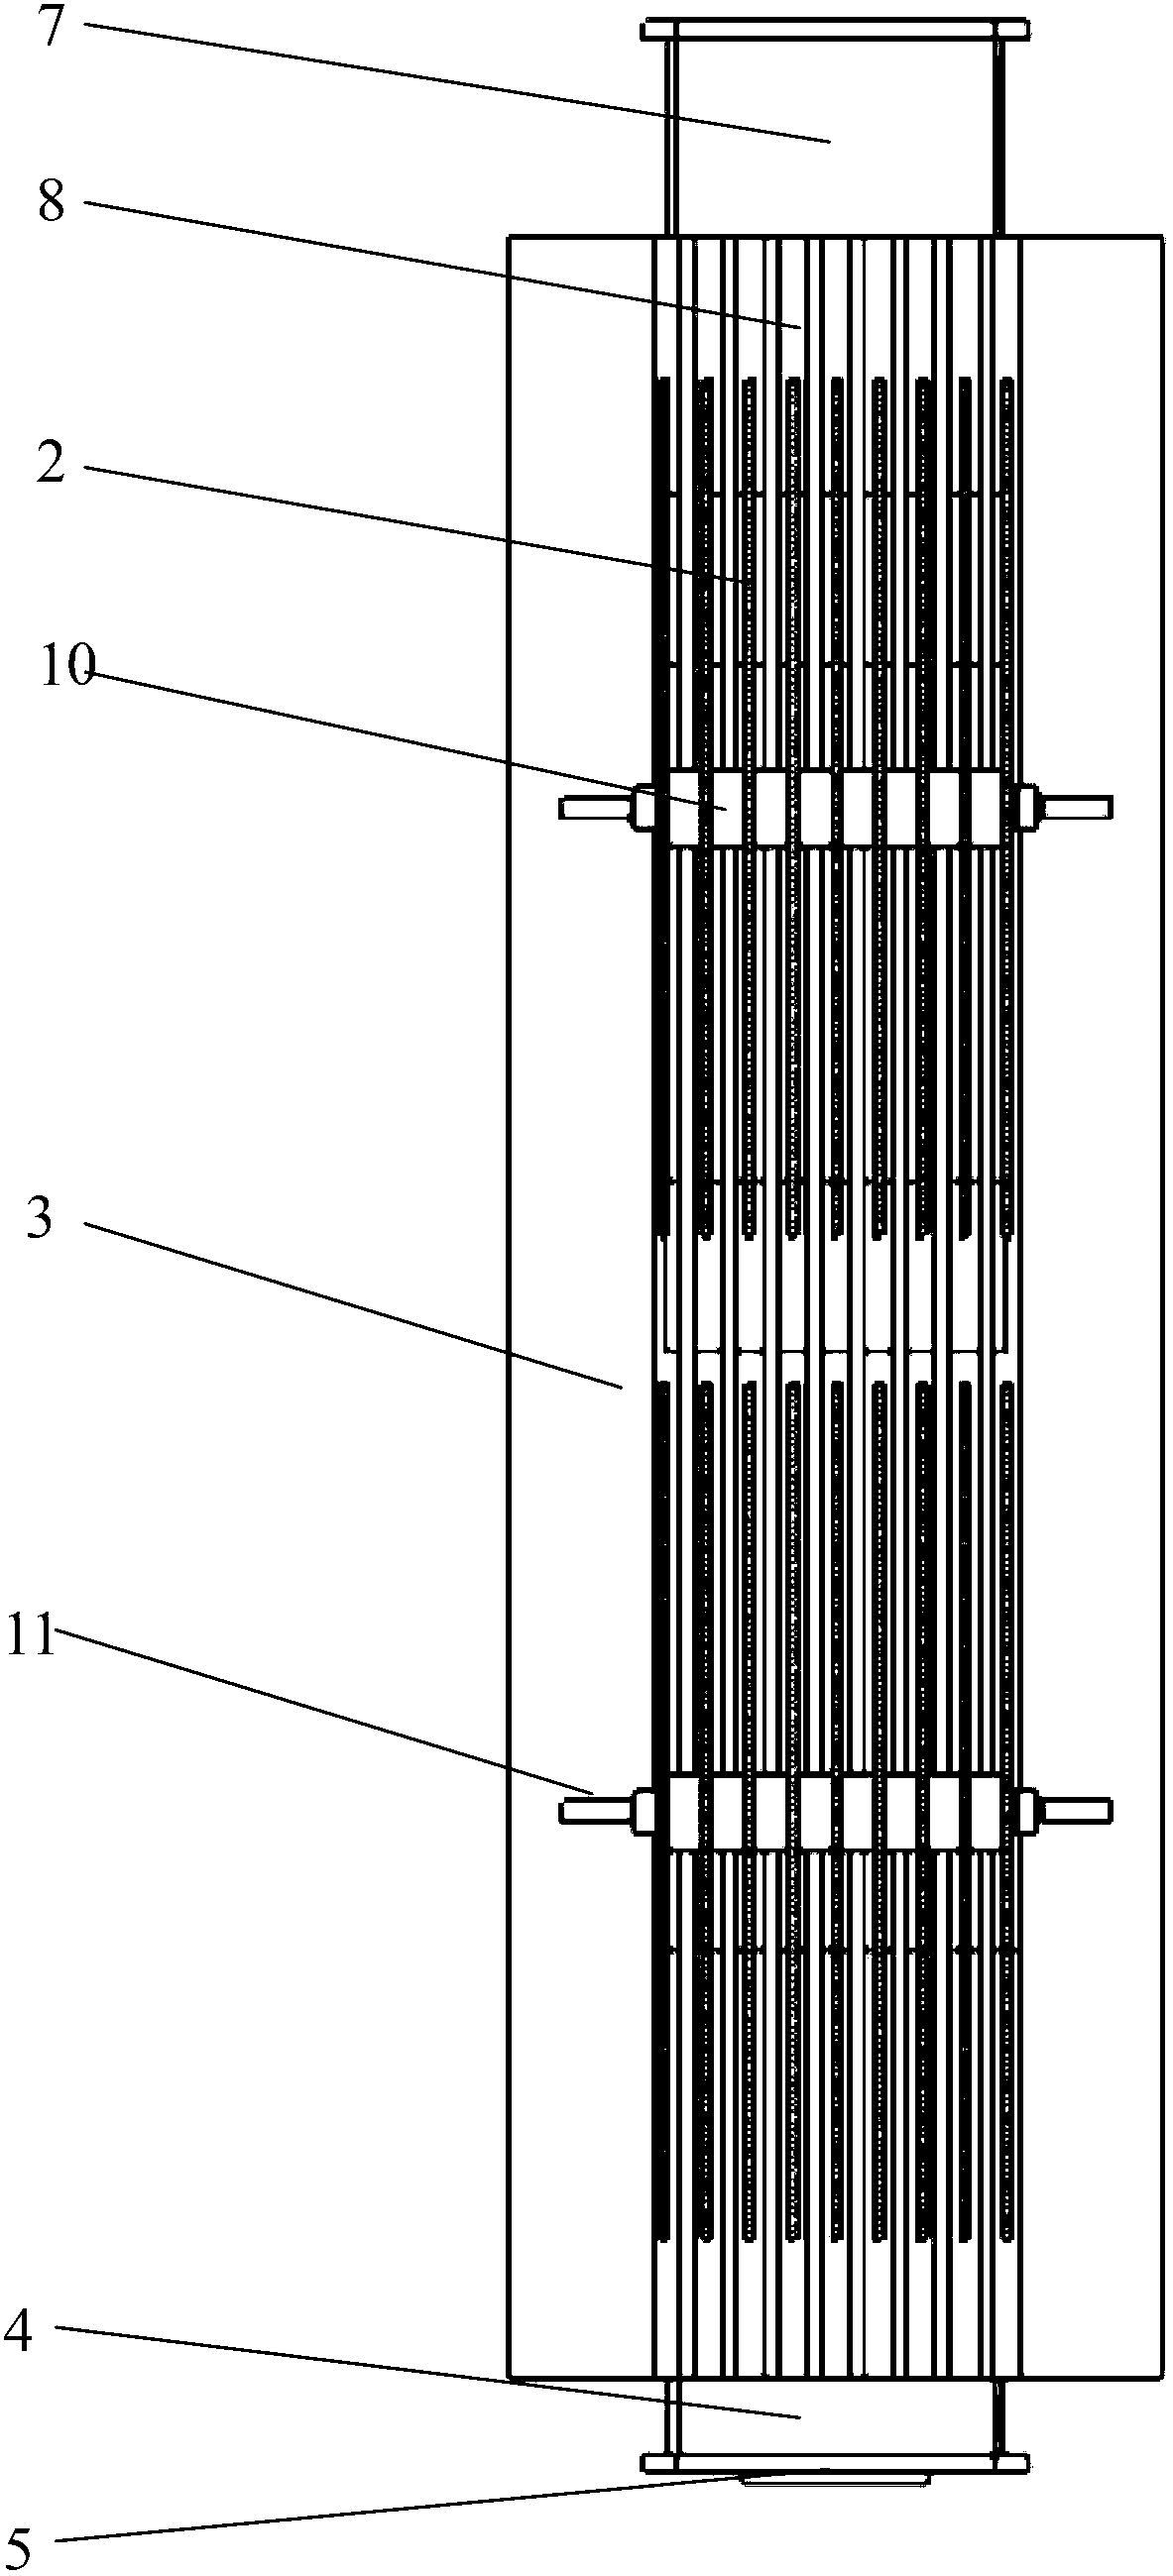 Novel combination type evaporation condenser